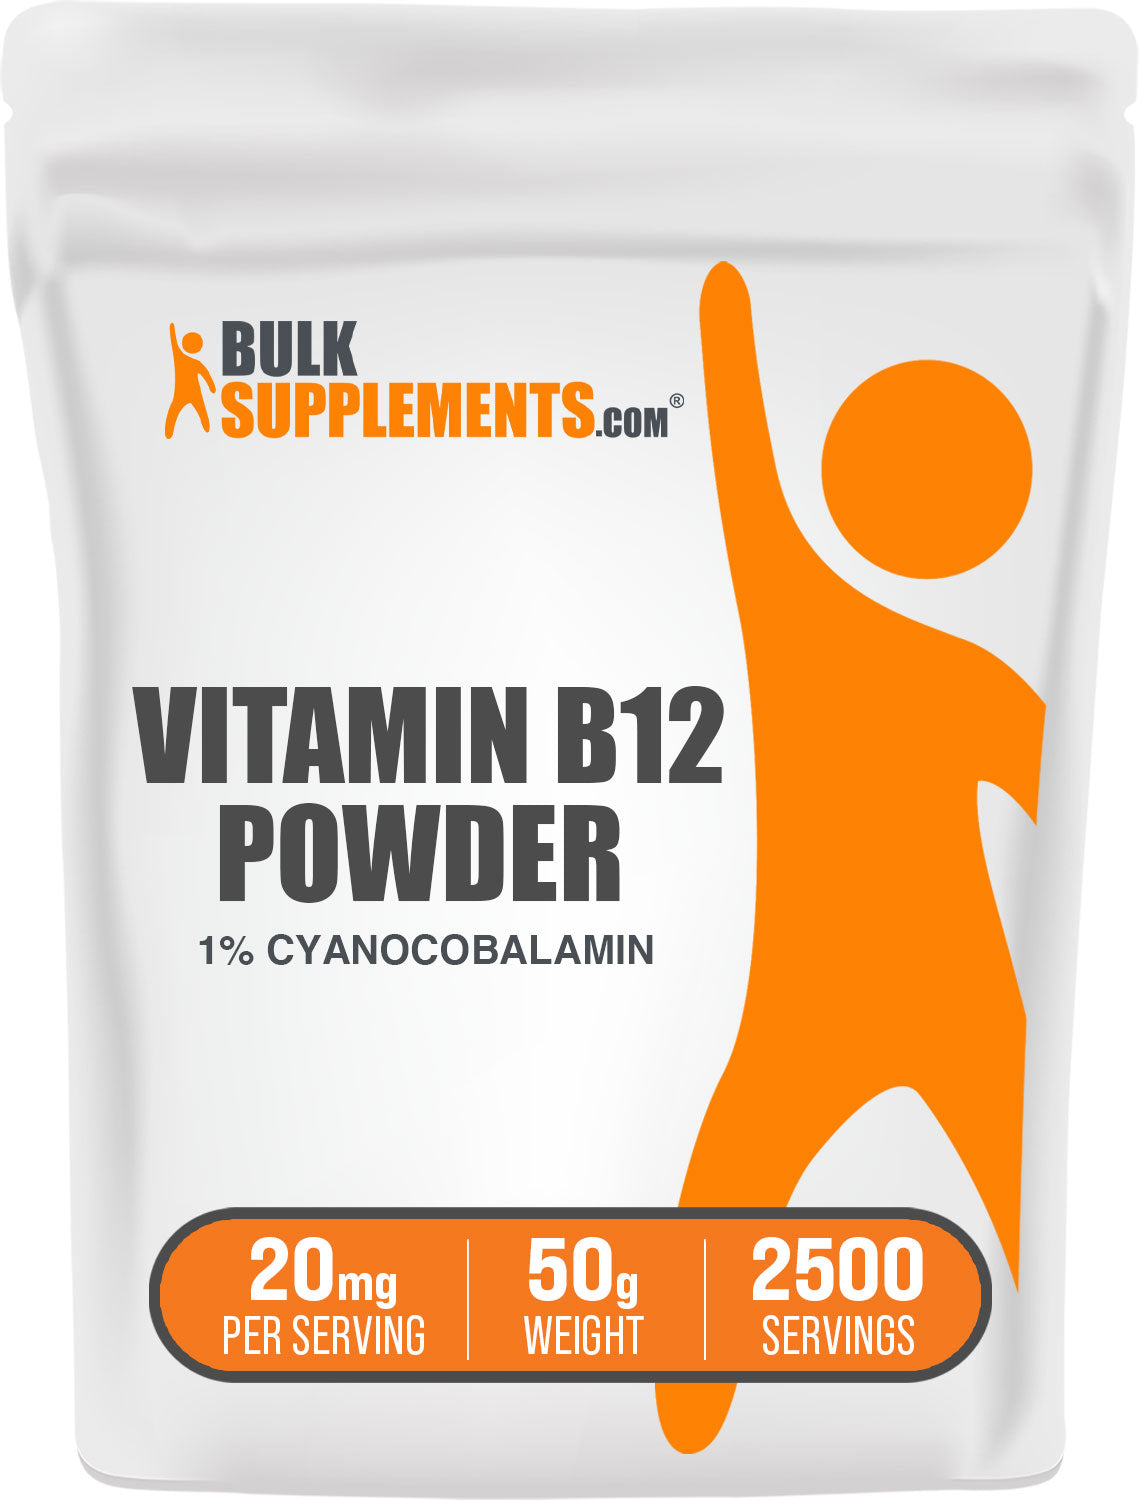 BulkSupplements Vitamin B12 Powder 1% Cyanocobalamin 50g bag